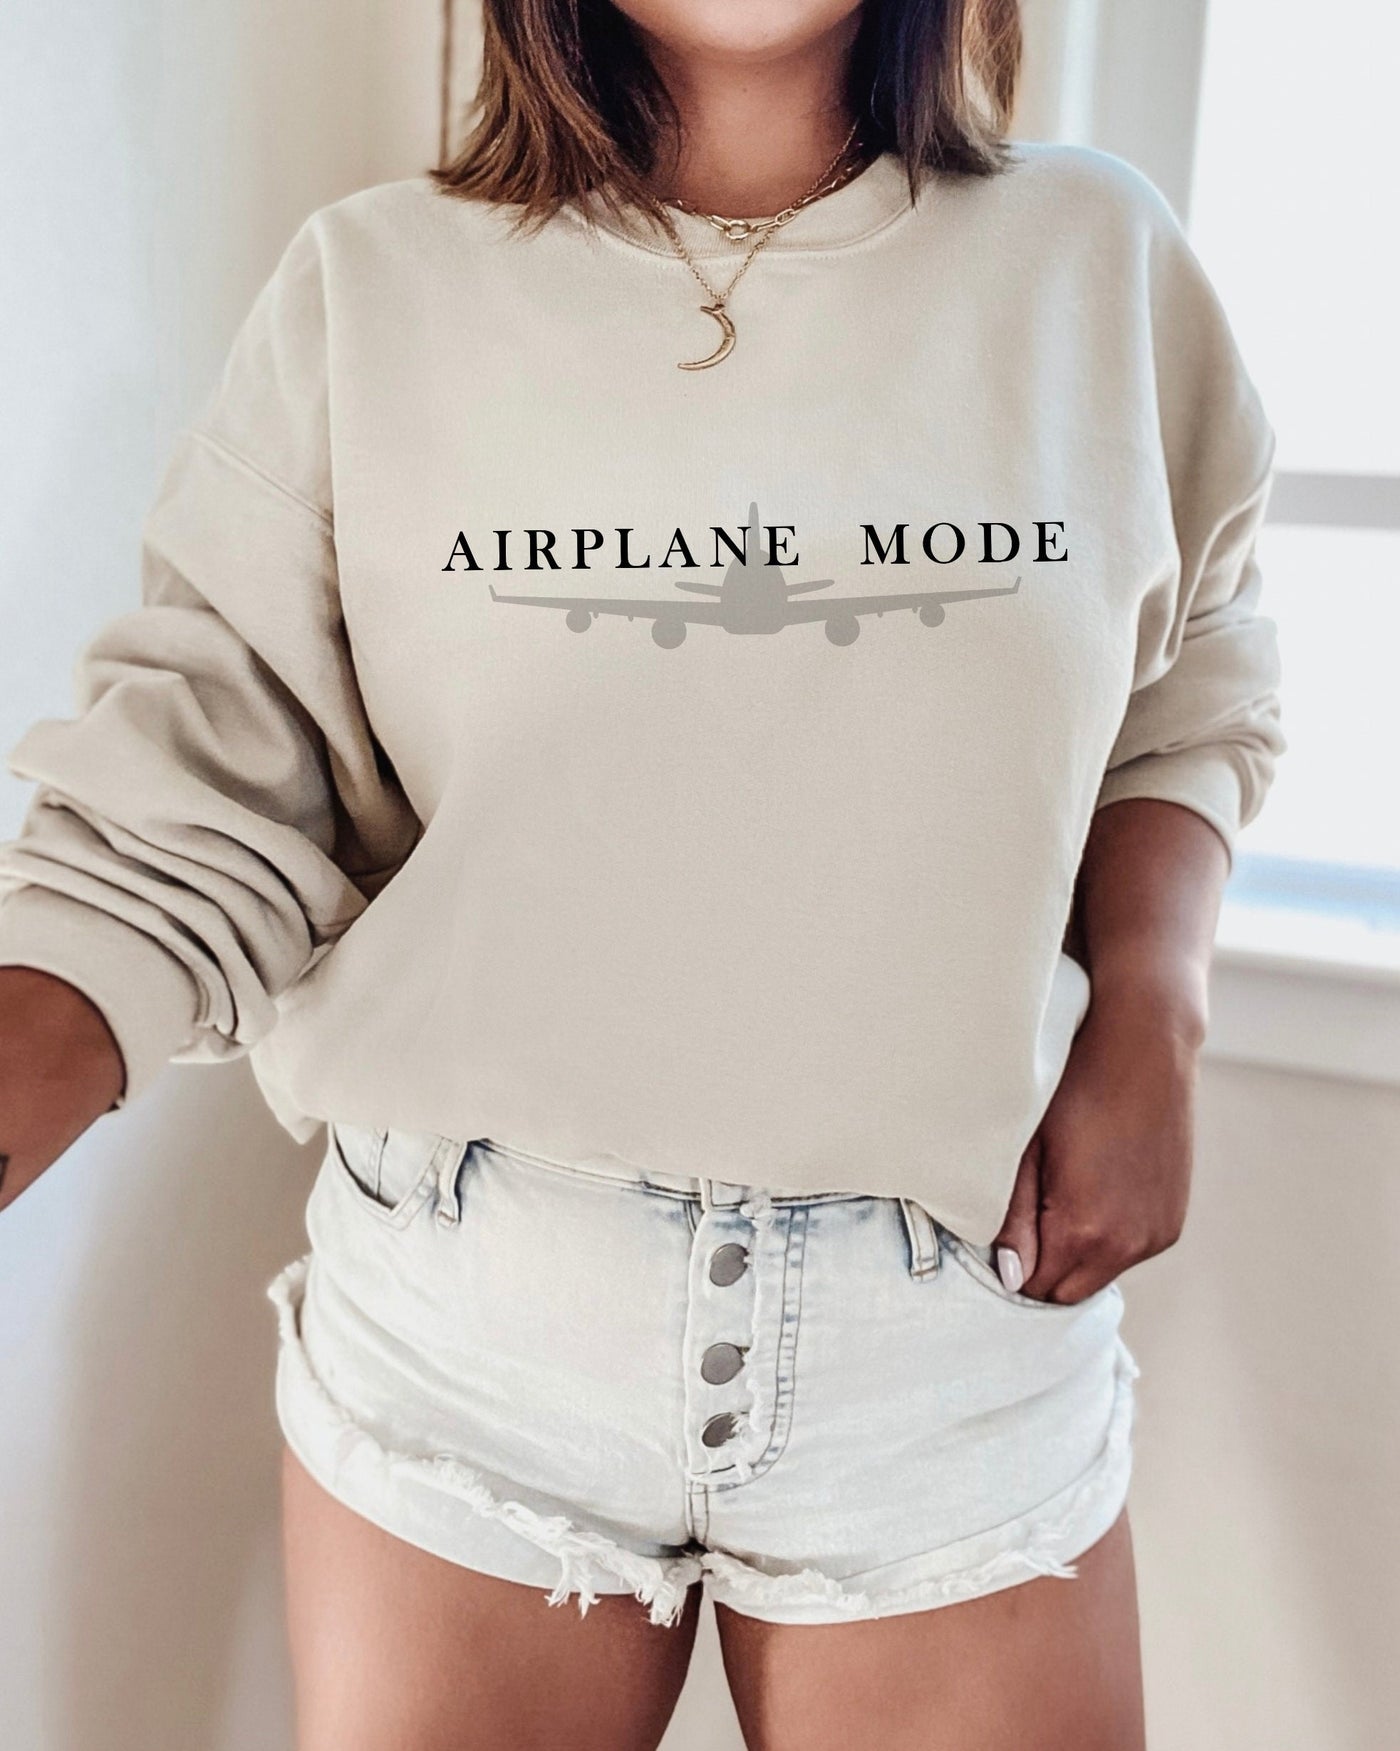 Travel Sweatshirt, Travel Crewneck, Airplane Mode, Traveler Sweatshirt, Airplane Sweatshirt, Minimalist Crewneck, Gift for Traveler, Plane